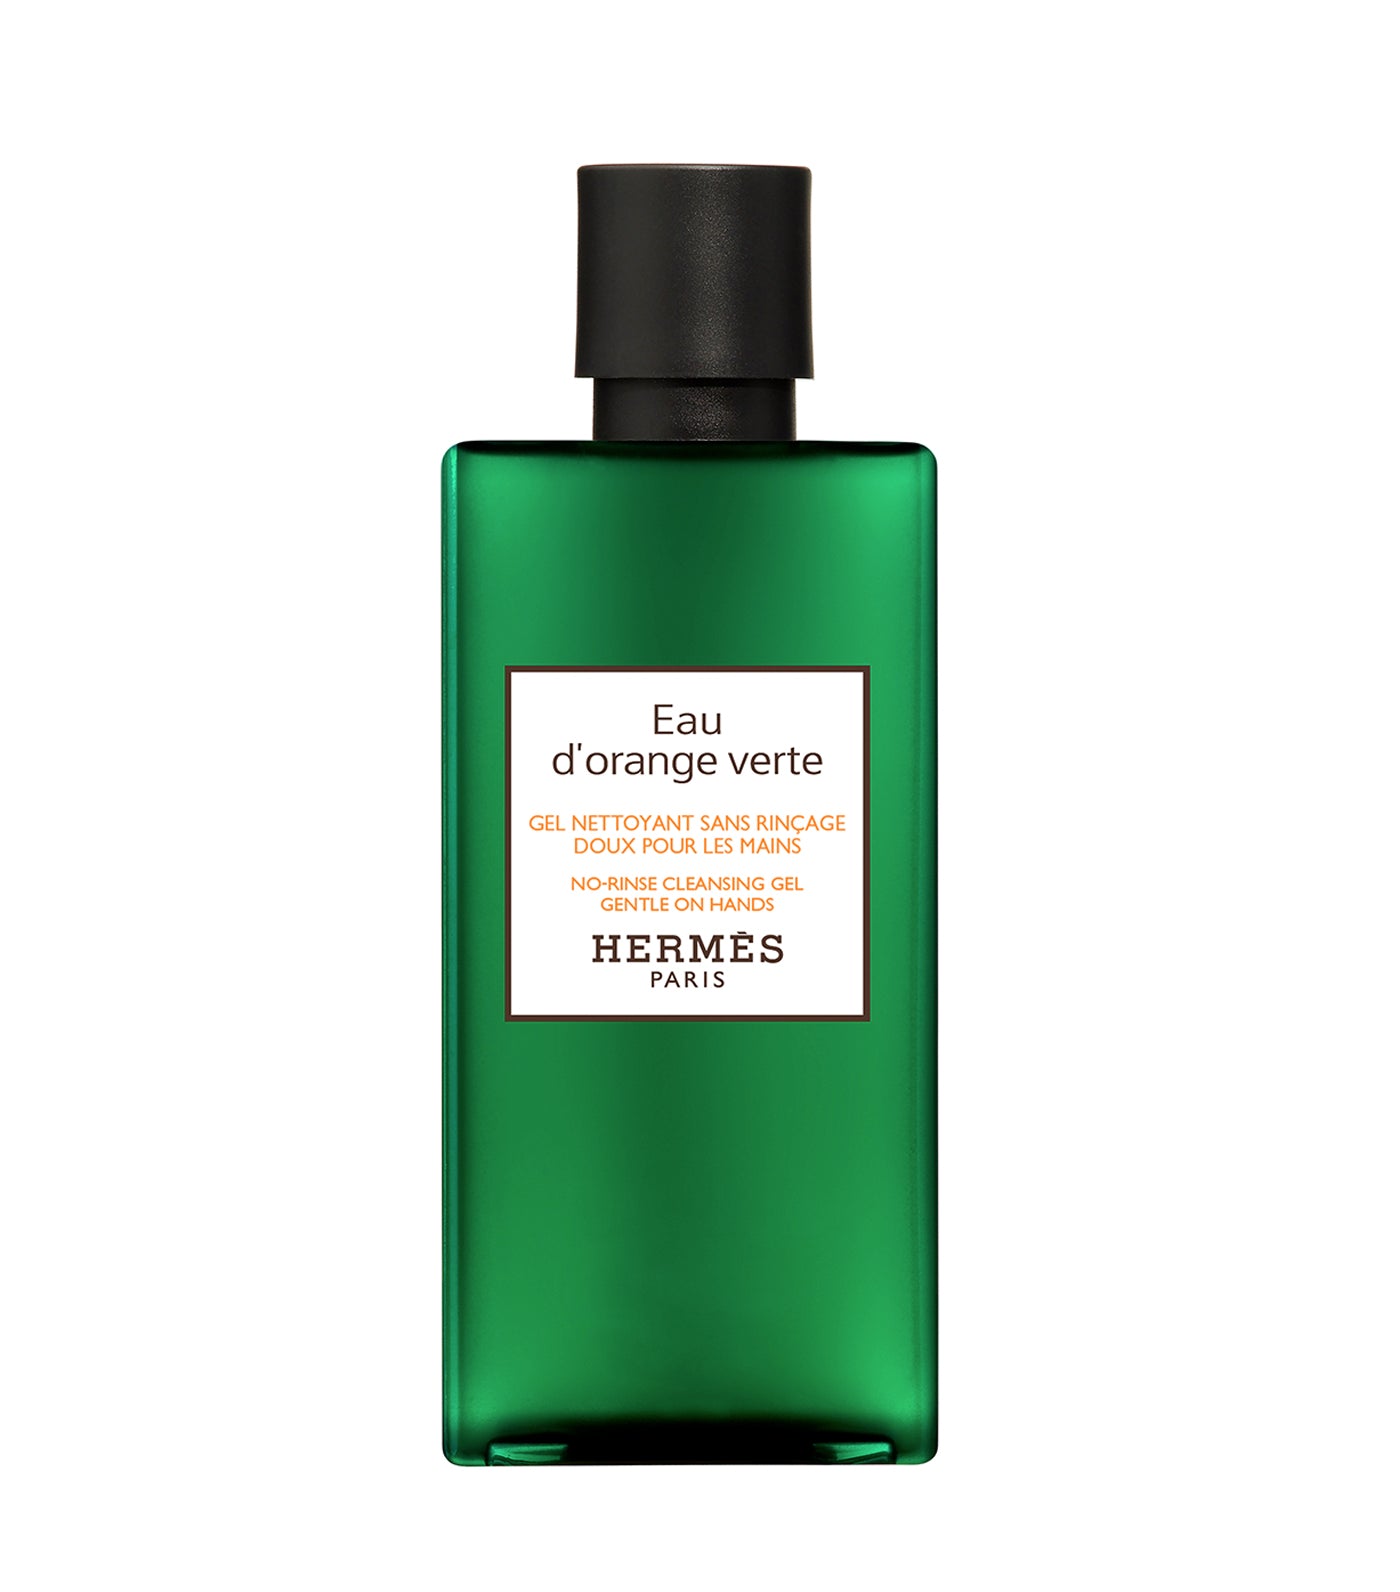 Eau d'orange verte, Gentle no-rinse cleansing gel for the hands